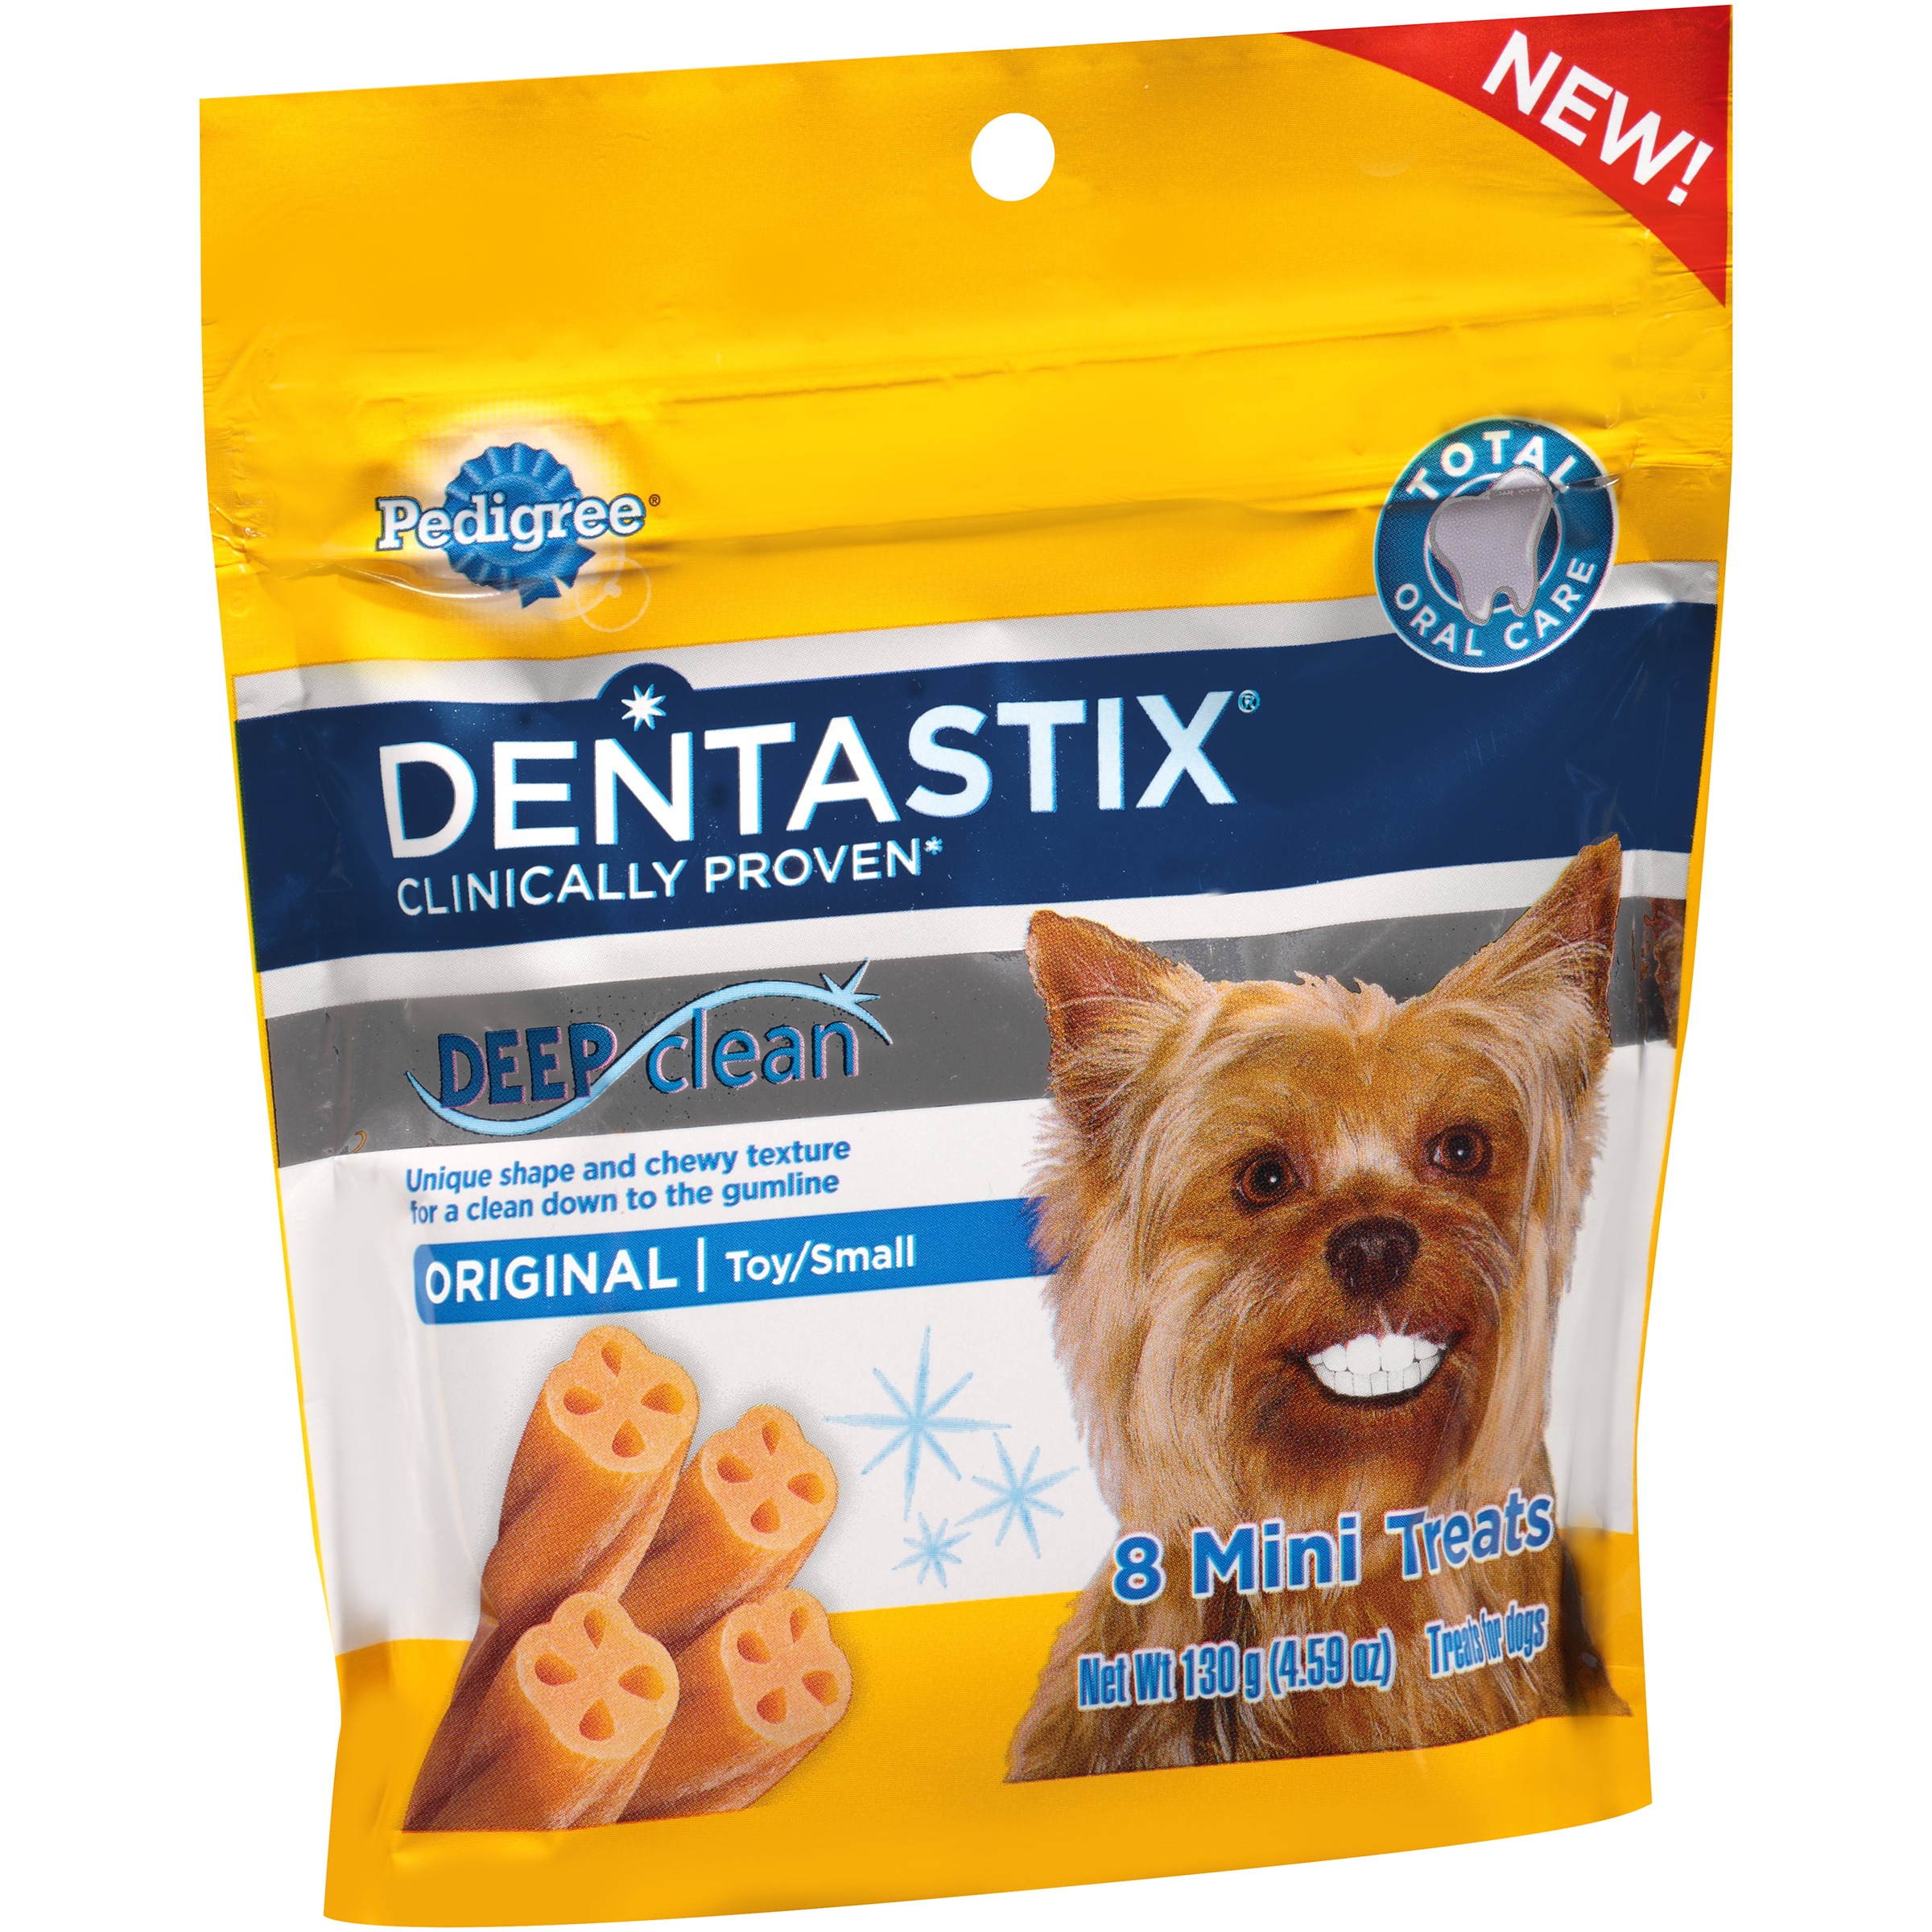 Pedigree Dog Care & Treats, DentaStix Deep Clean Original Toy/Small, 4.59 oz (1.30 g)